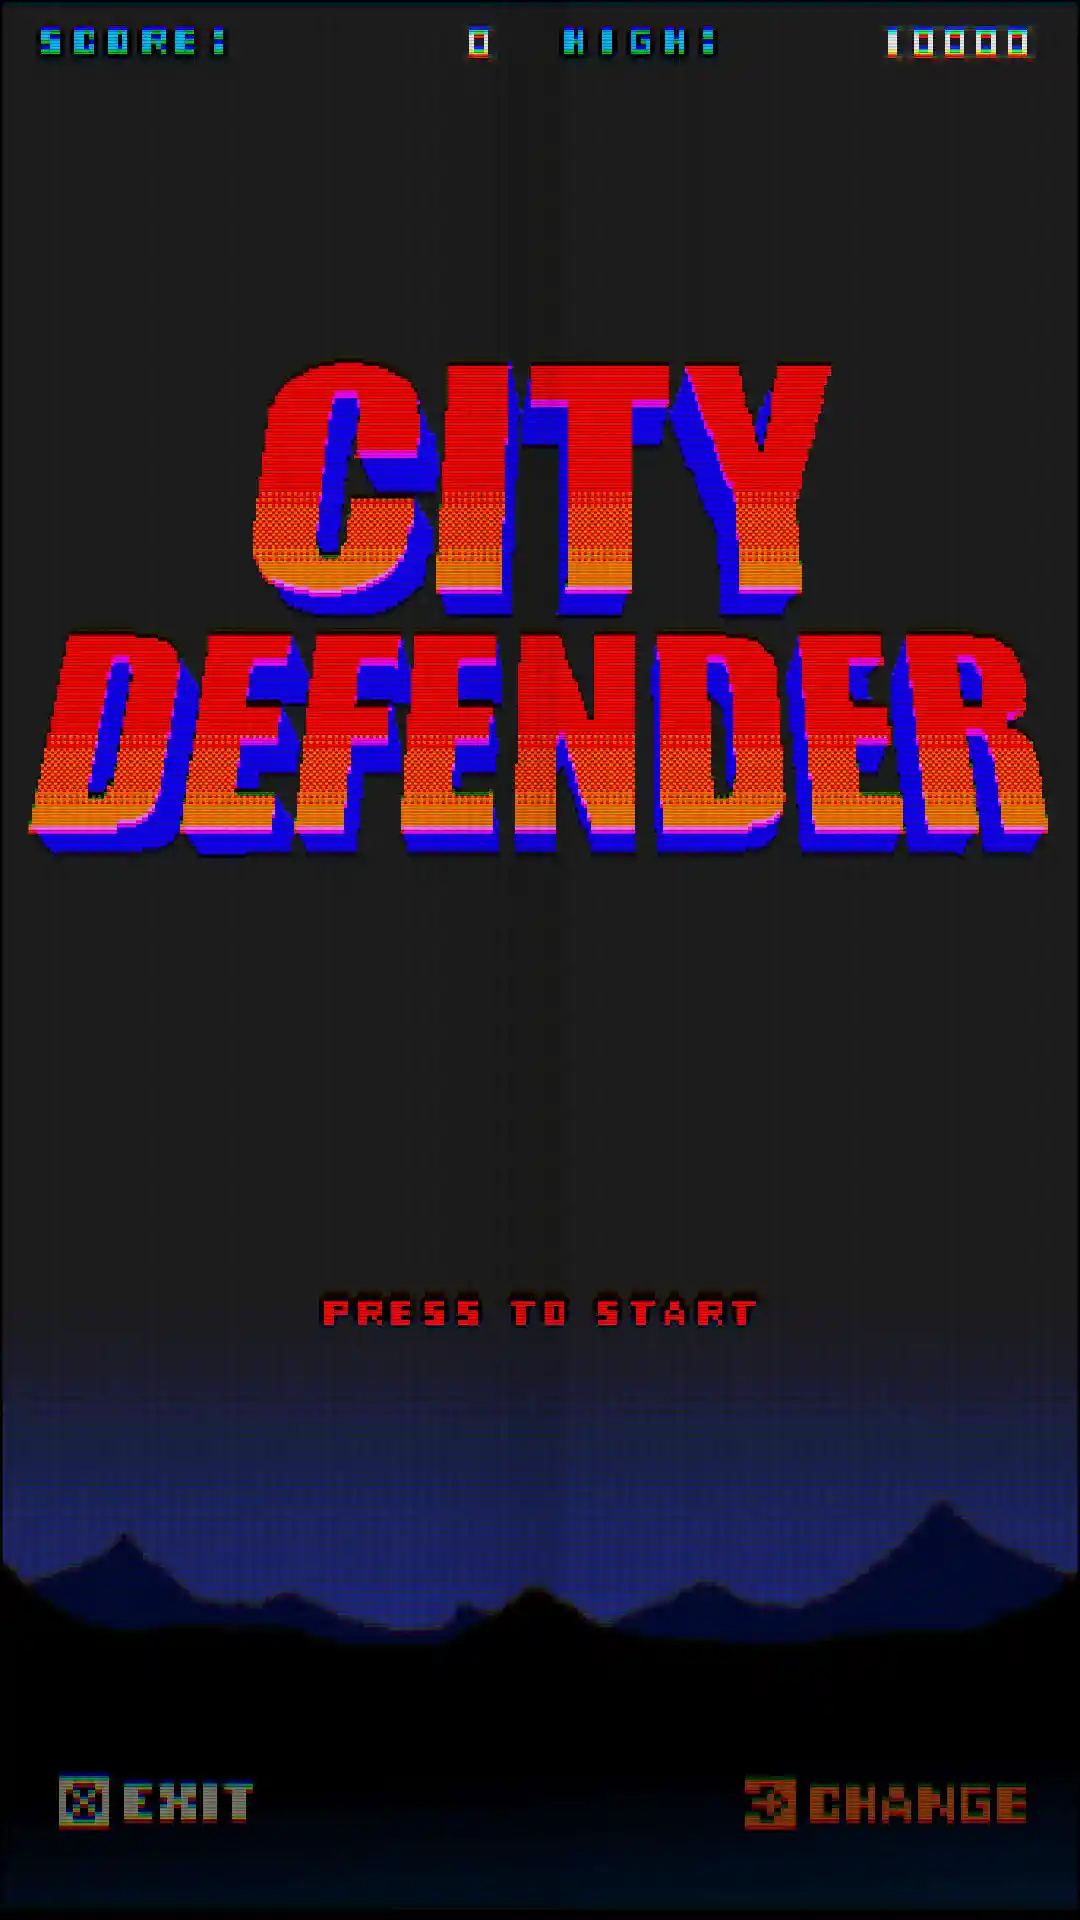 「City Defender」-タイトル.jpg